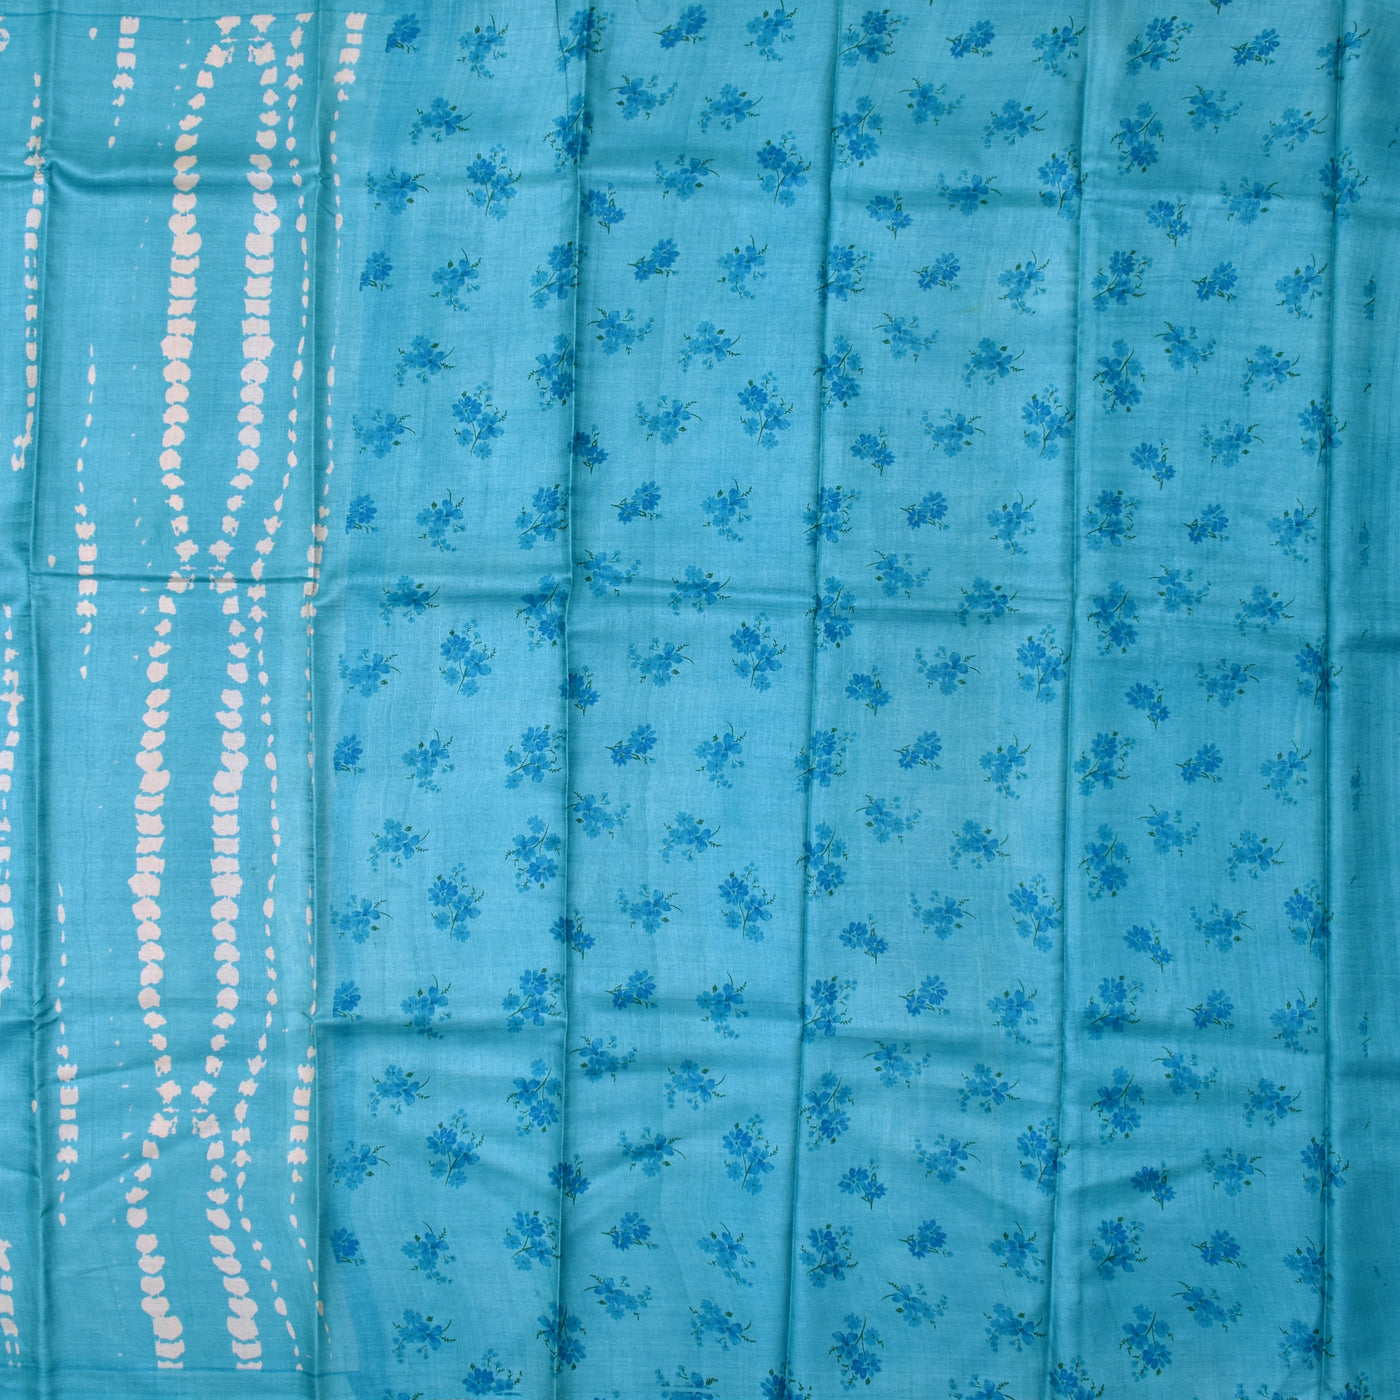 Blue Tussar Silk Saree with Shibori Print Design